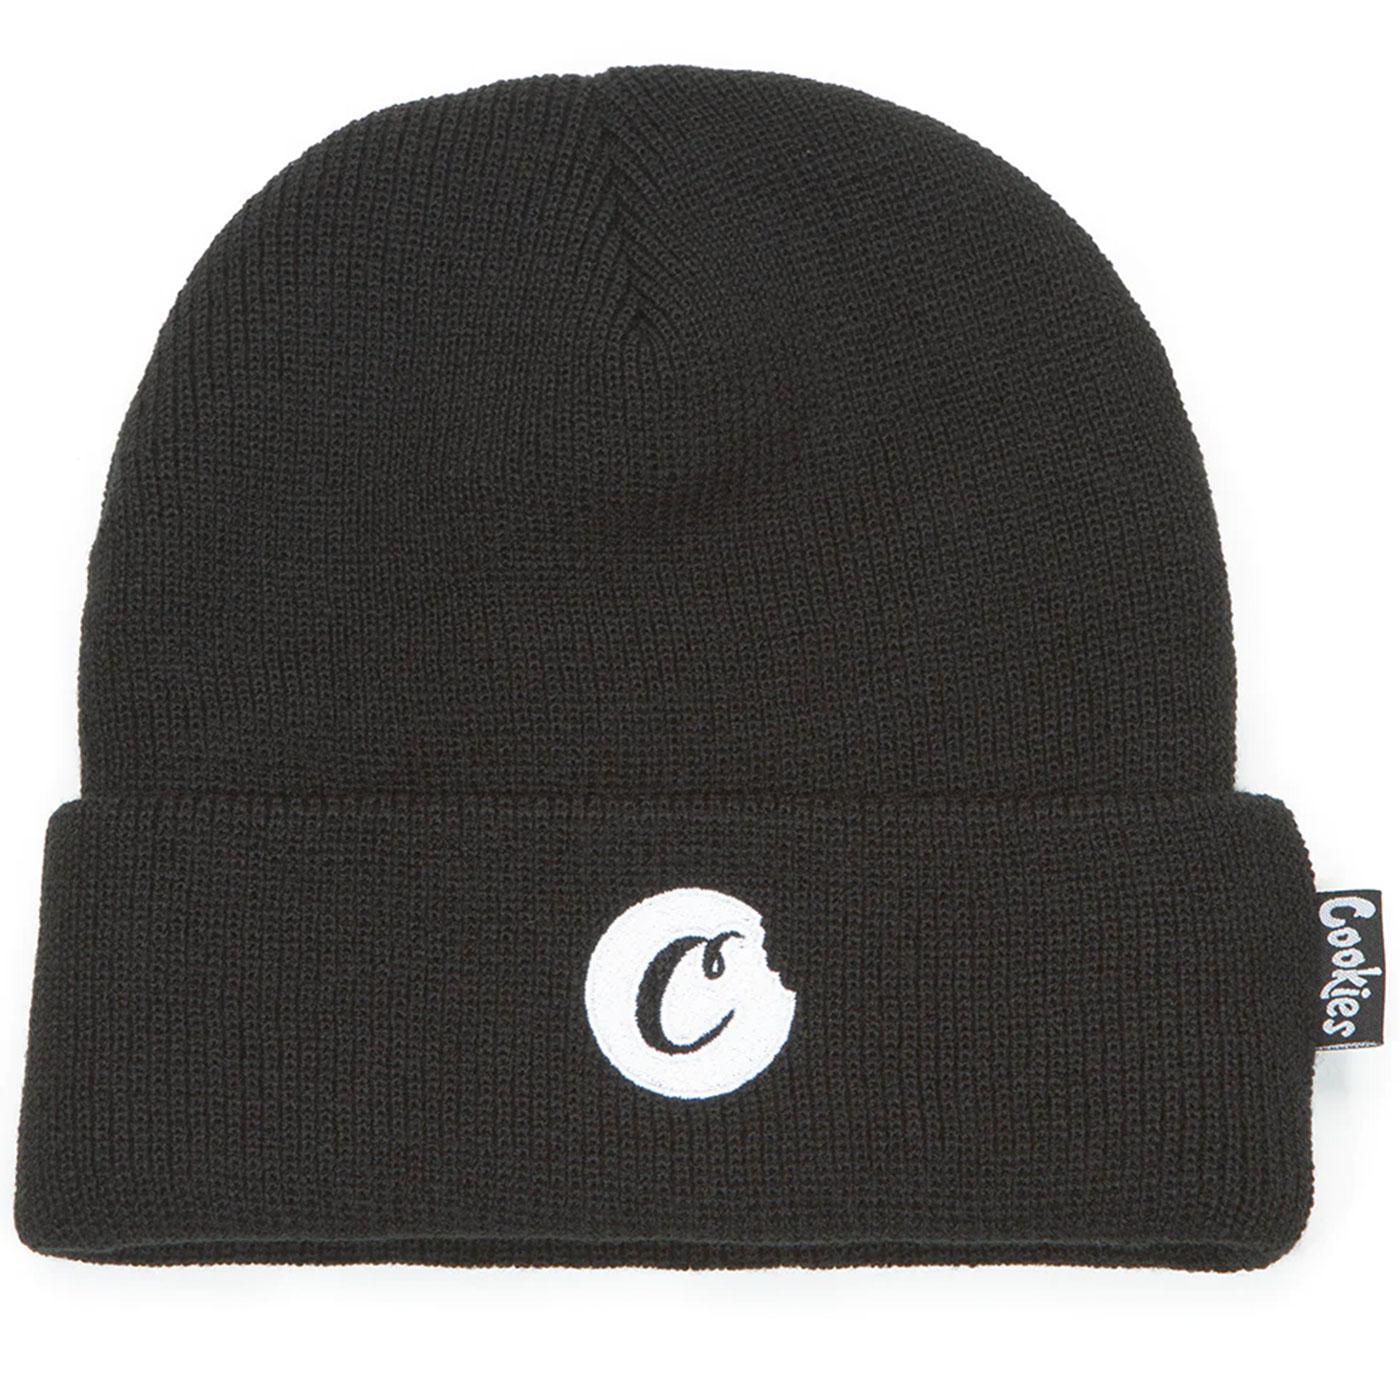 C-Bite Knit Beanie (Black/White) – Urban Street Wear